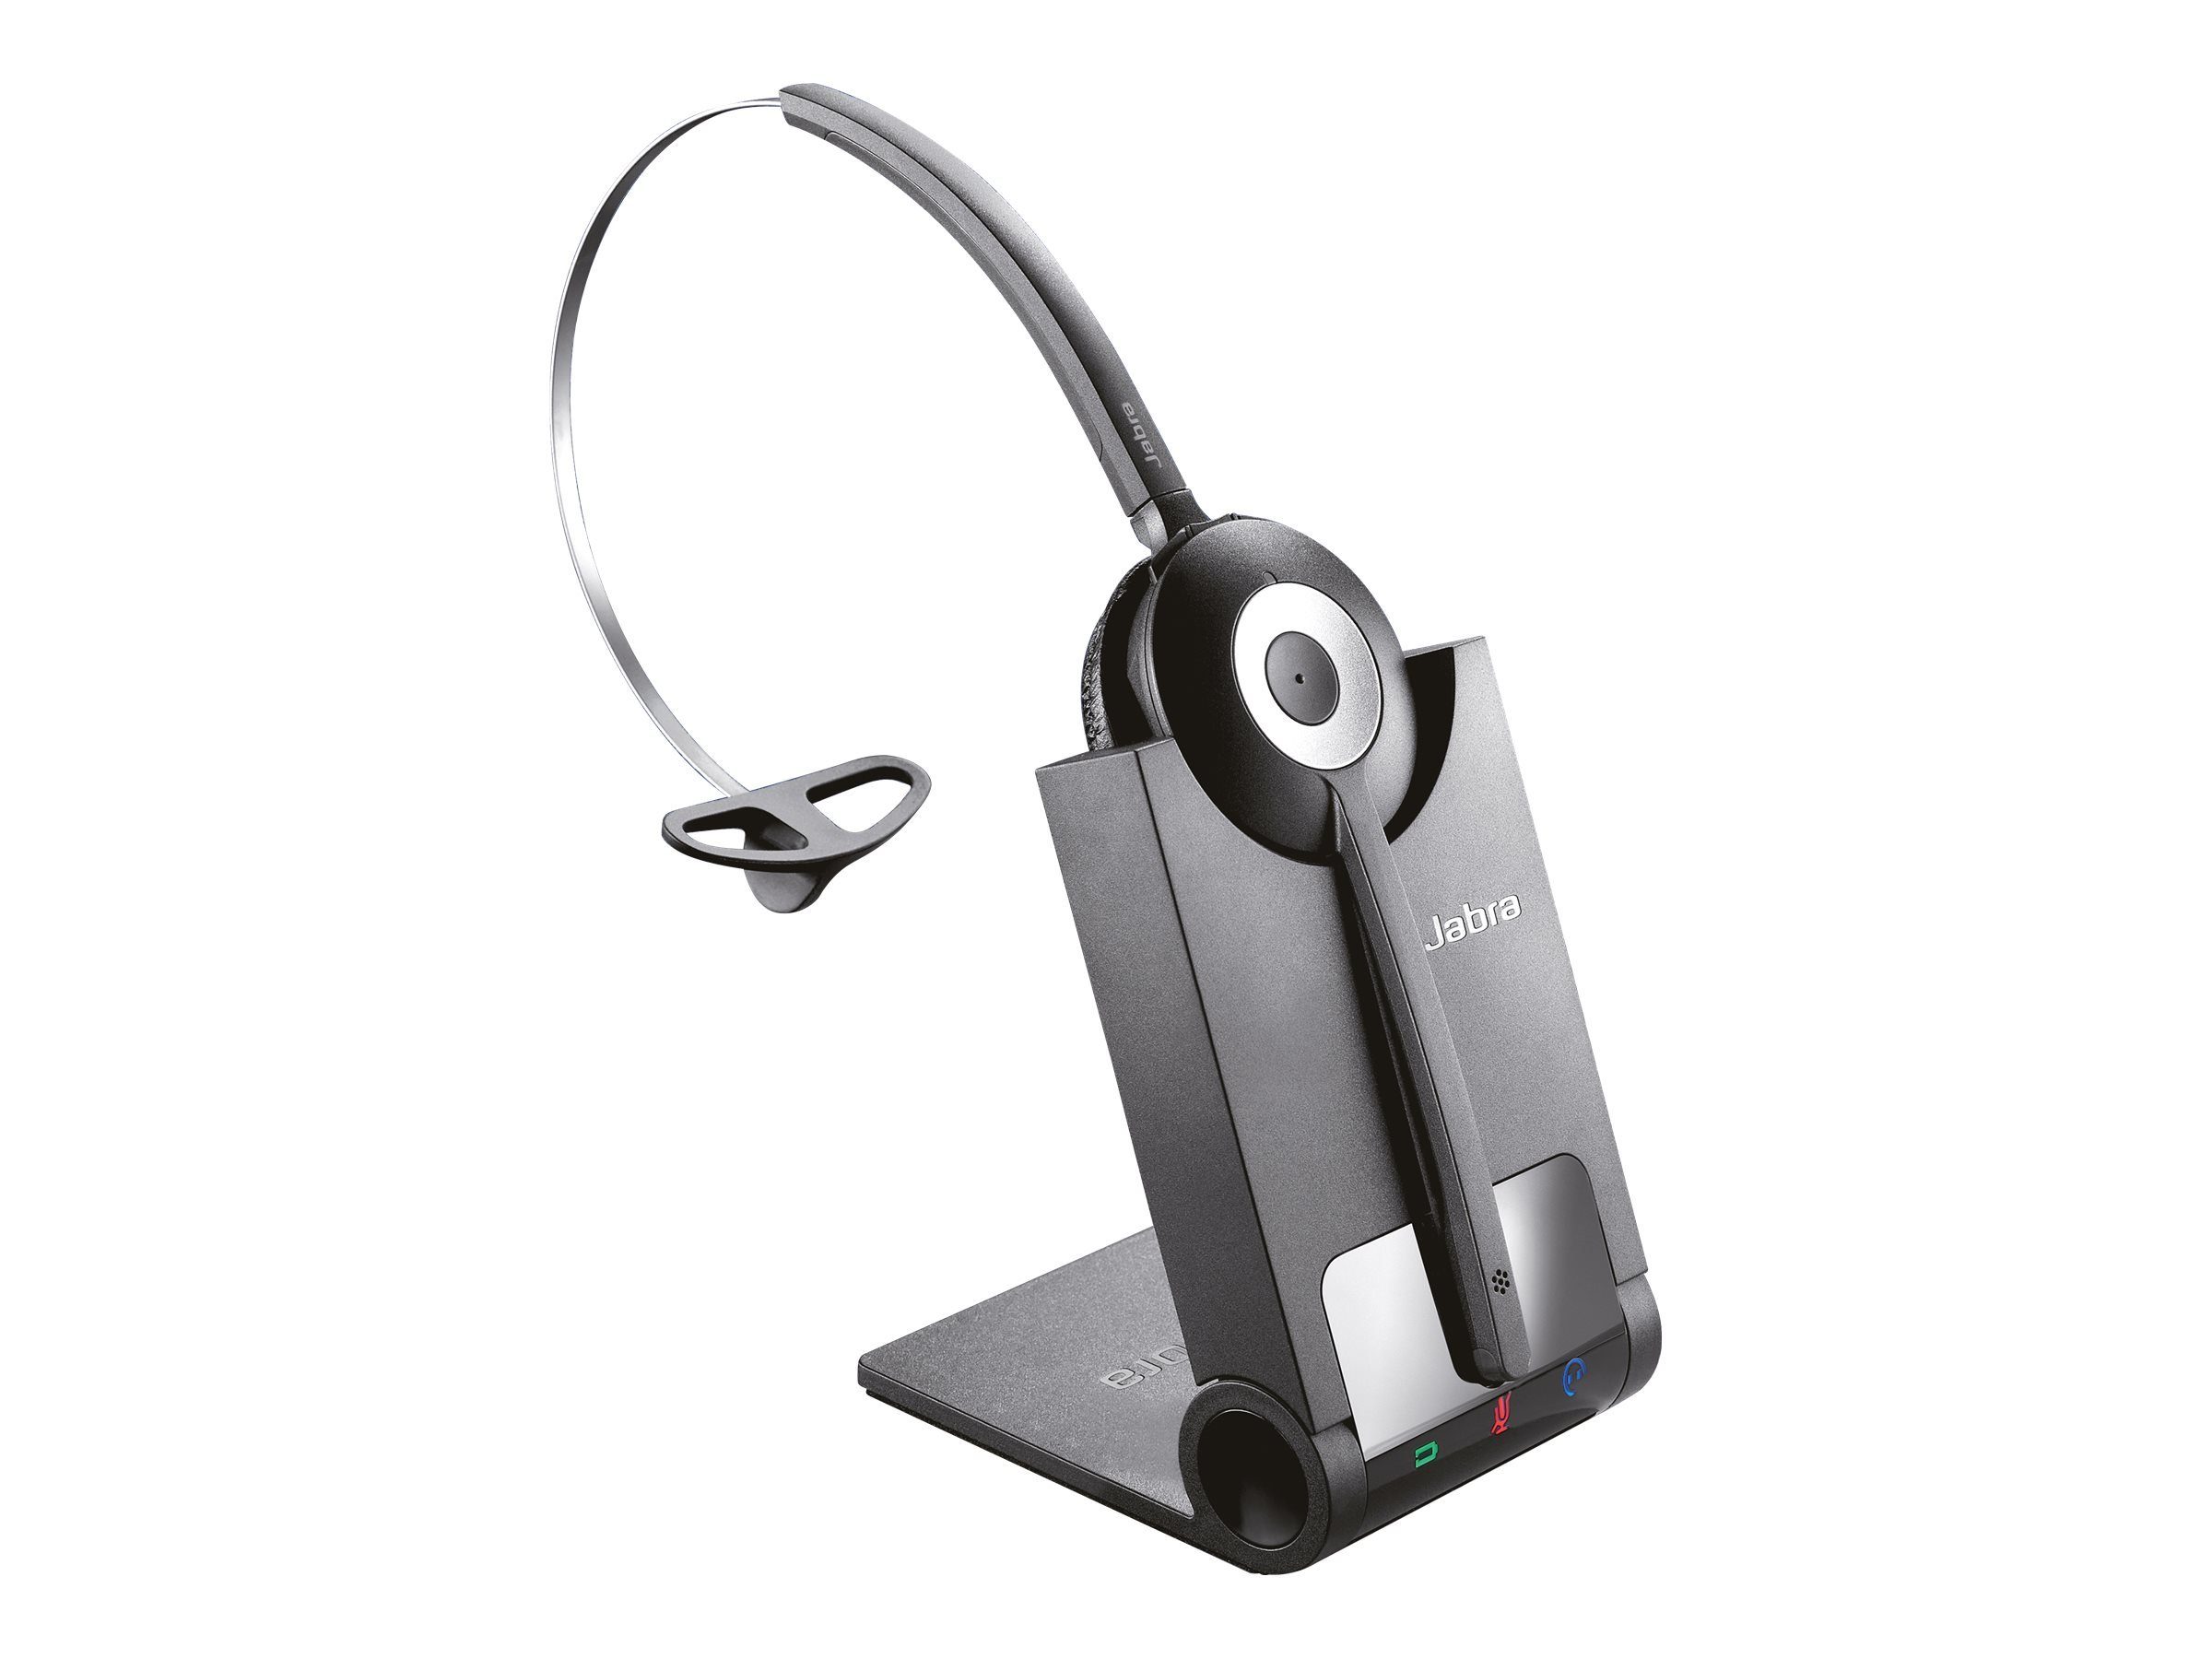 Agfeo AGFEO Headset 930 Mono, schnurloses Headset schnurloses DECT-Headset m Headset